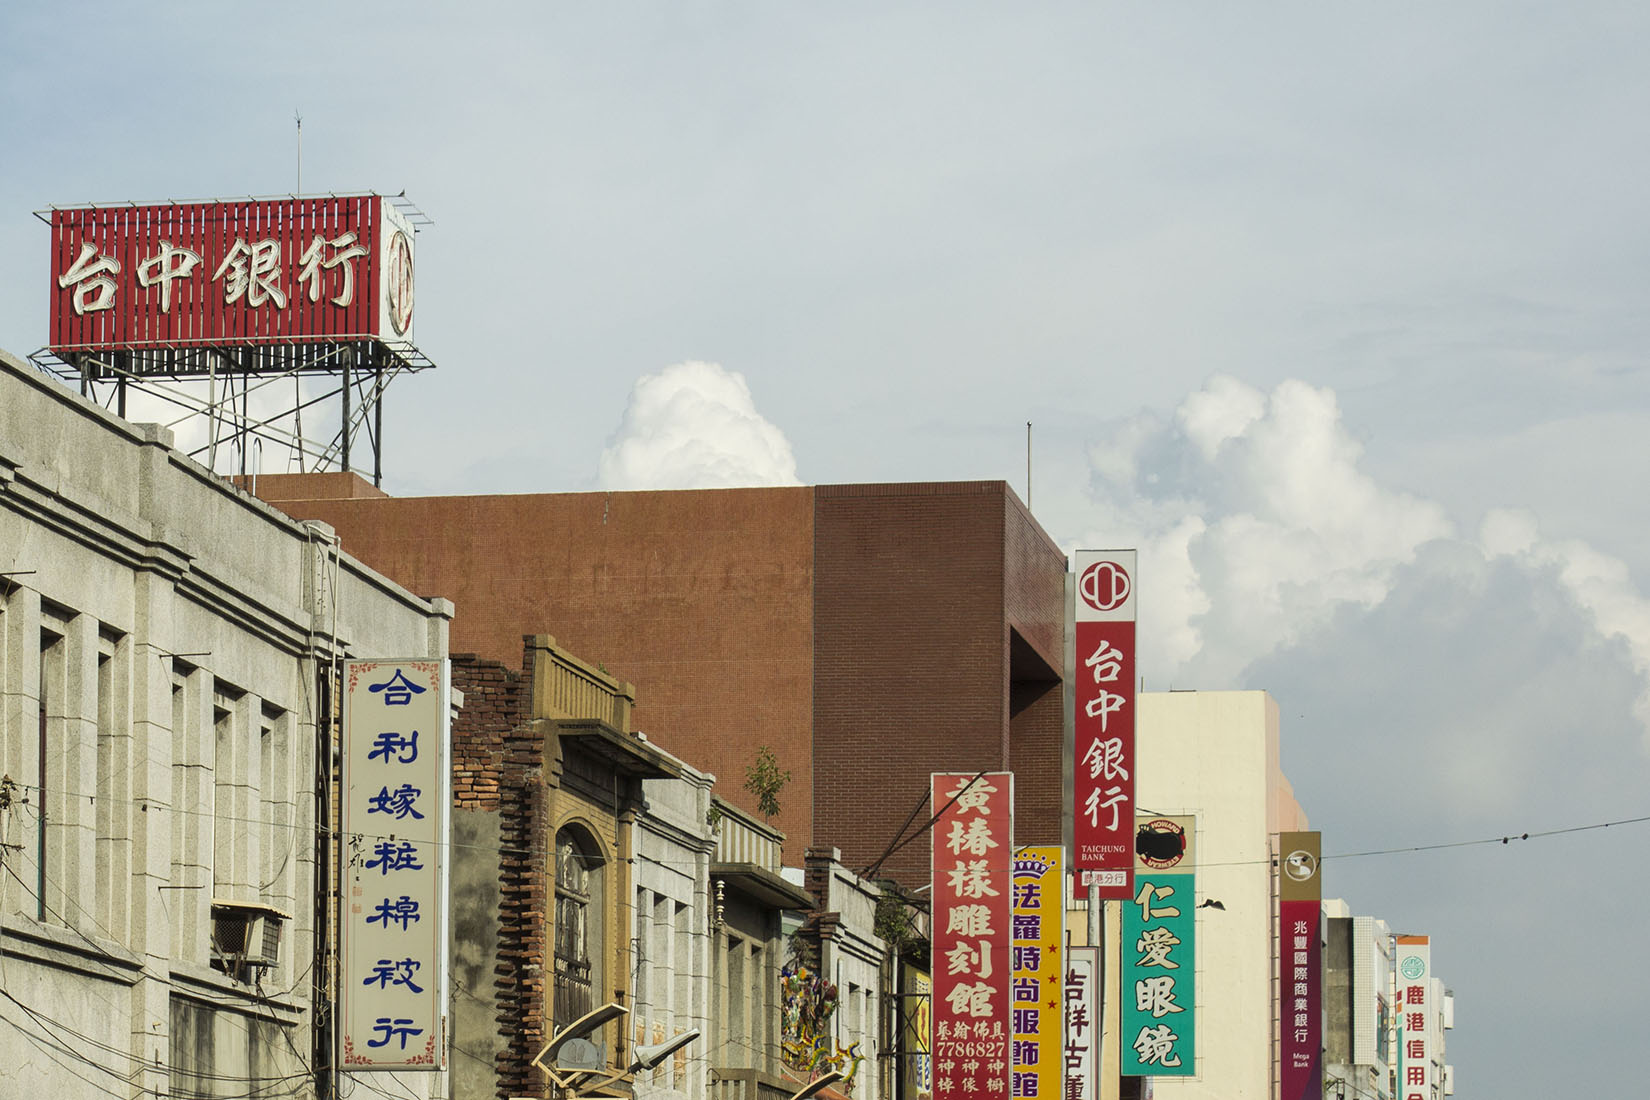 Taichung, voyage, architecture, panneaux publicitaires, sinogrammes